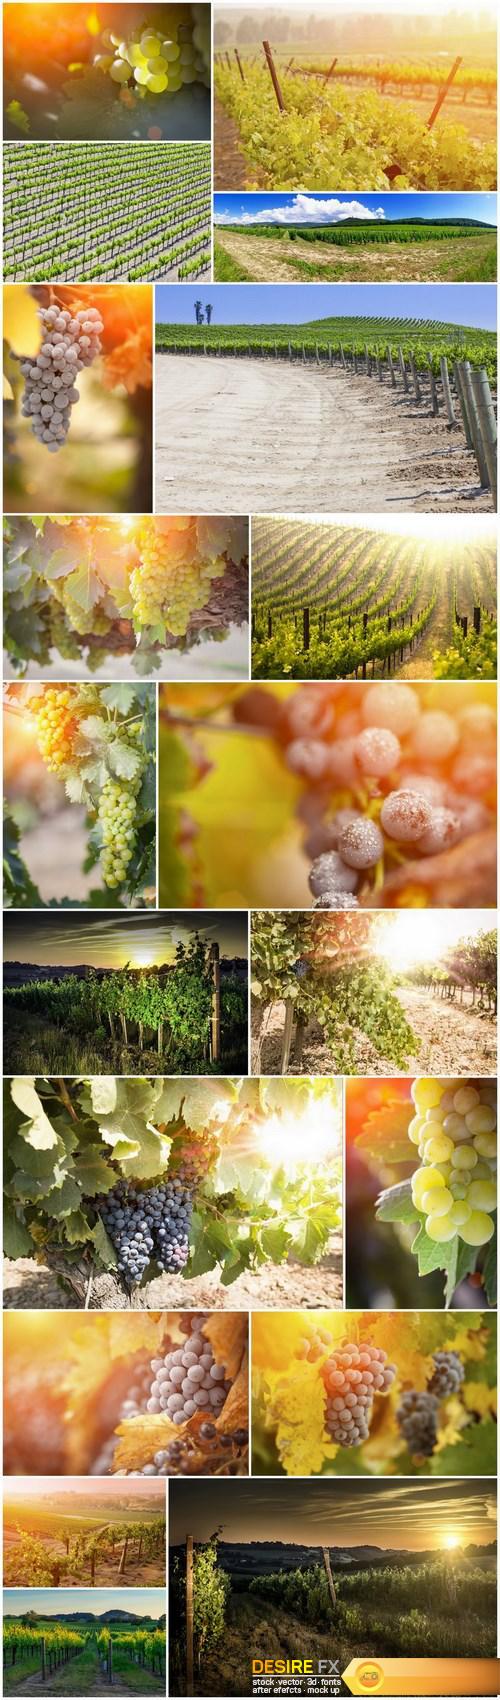 Solar valley of vineyards - 20xUHQ JPEG